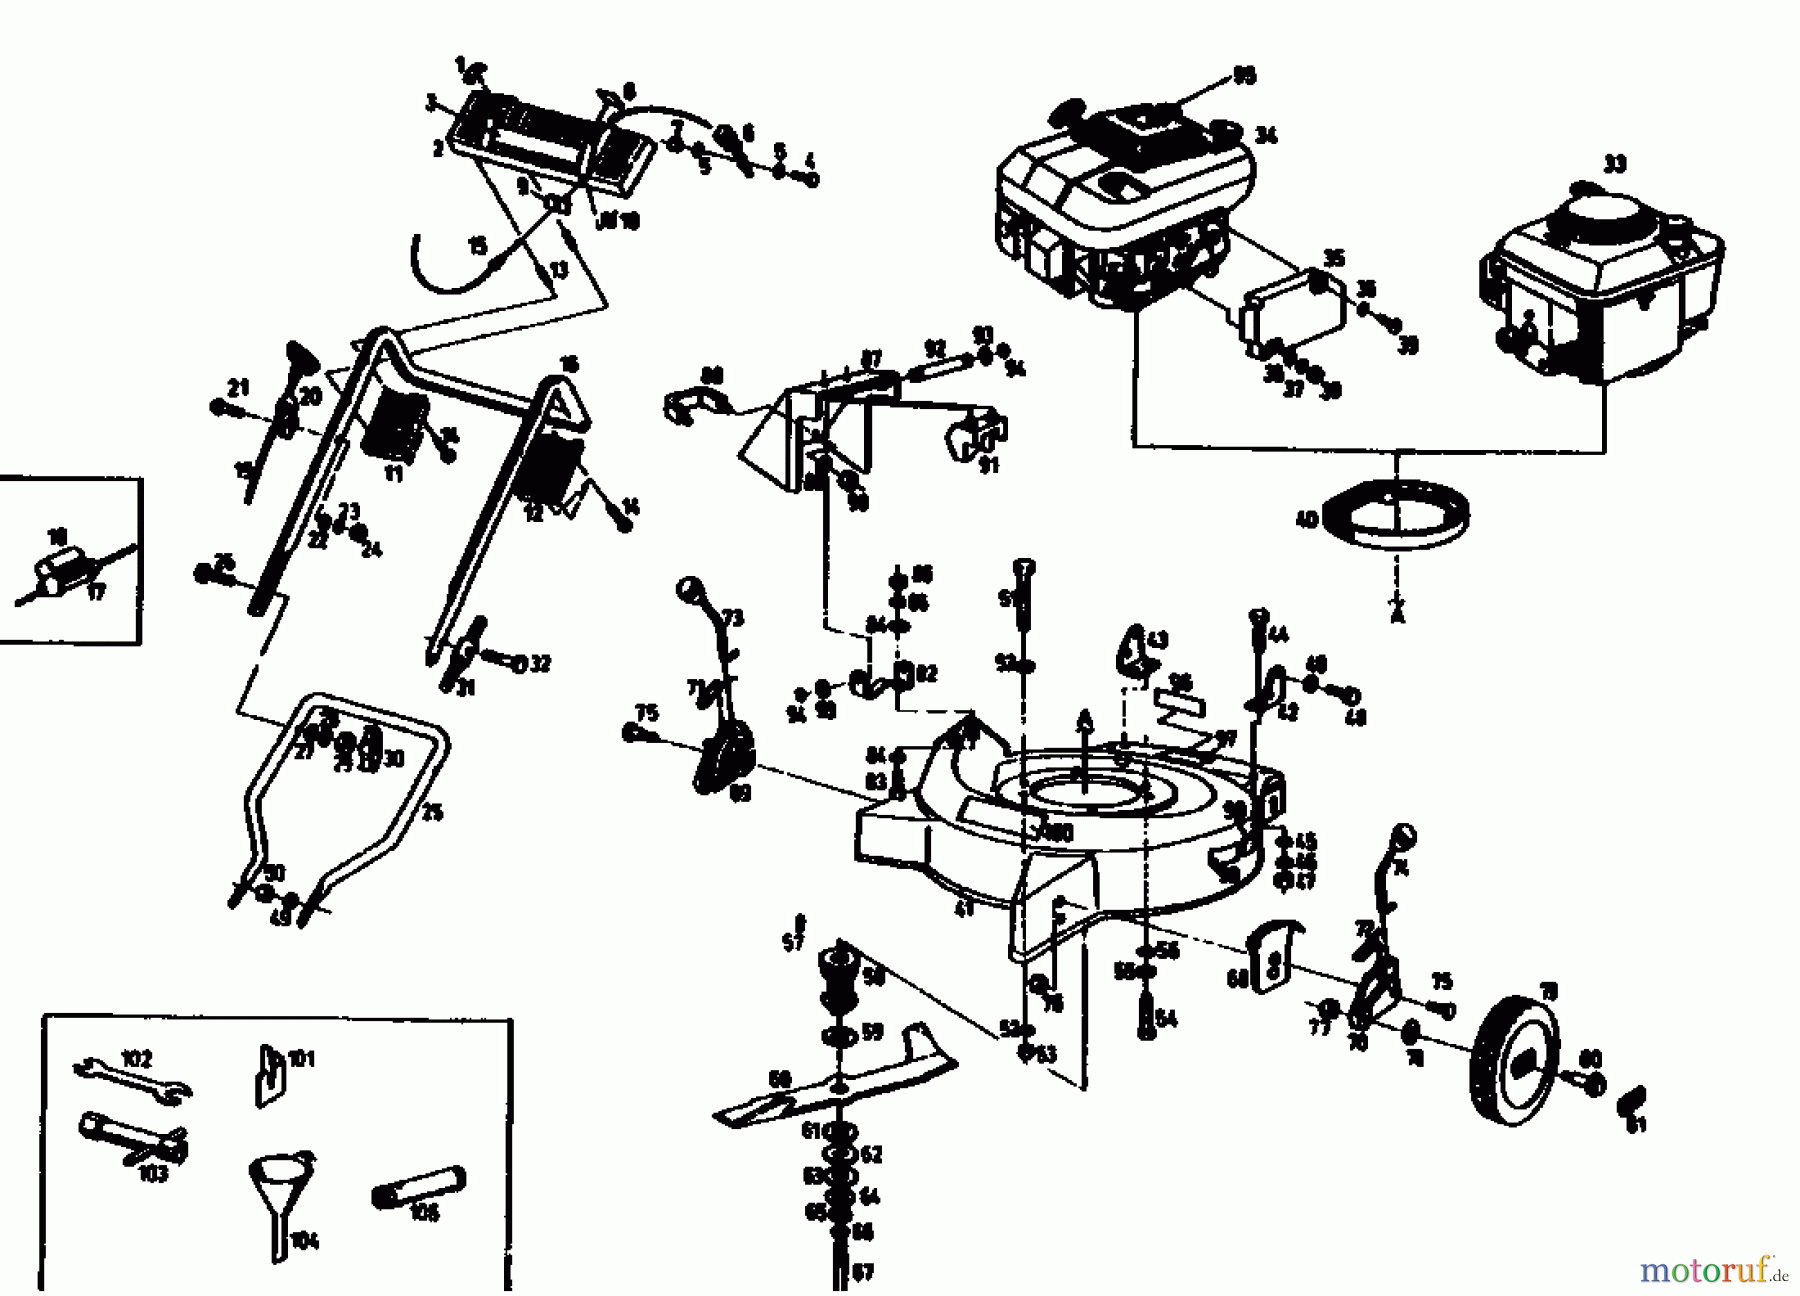  Gutbrod Petrol mower MS 484 04008.02  (1990) Basic machine